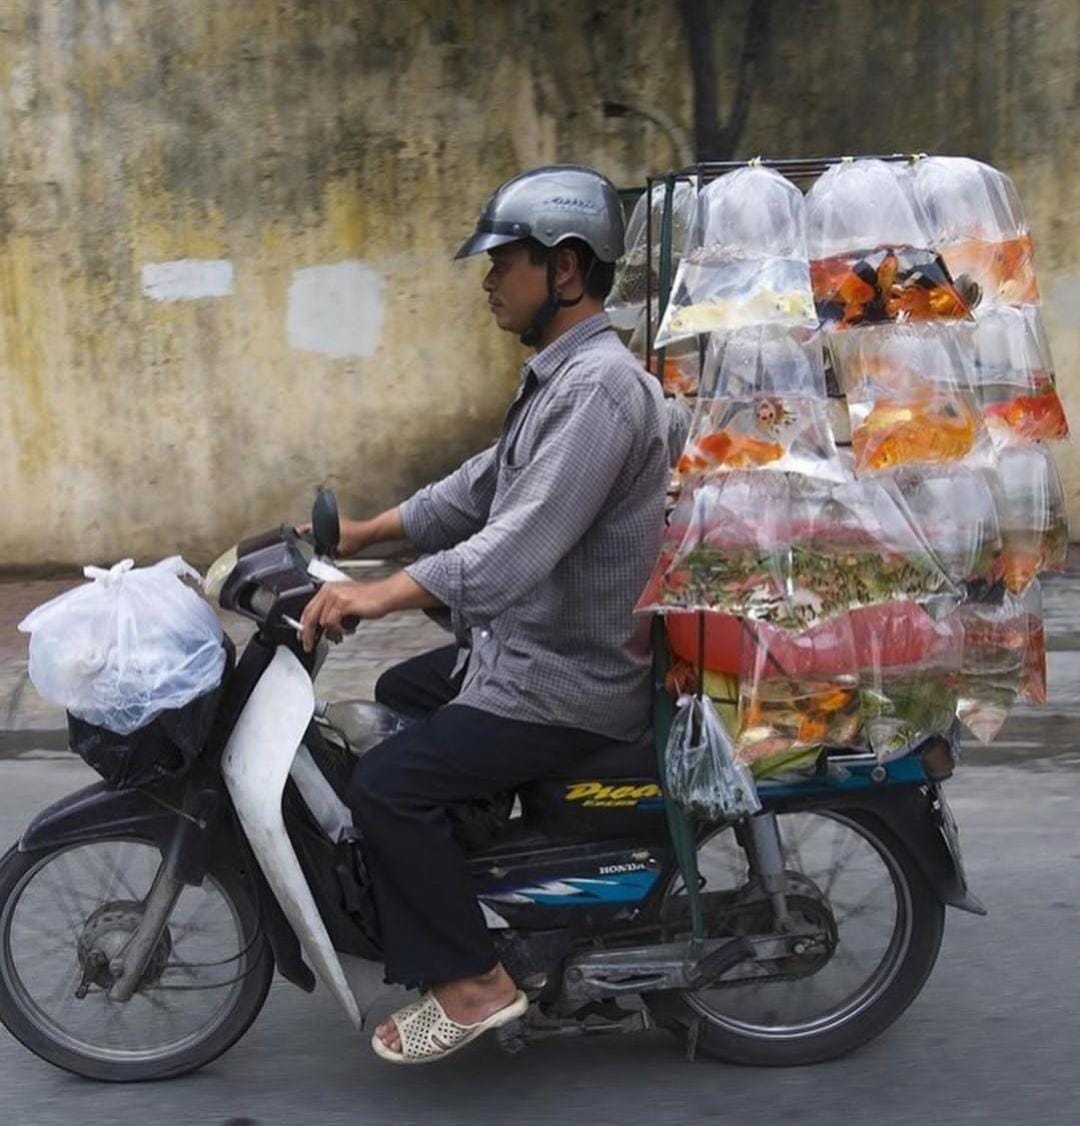 Cuma di Asia Tenggara, Ini Kumpulan Potret Unik Sepeda Motor Overload